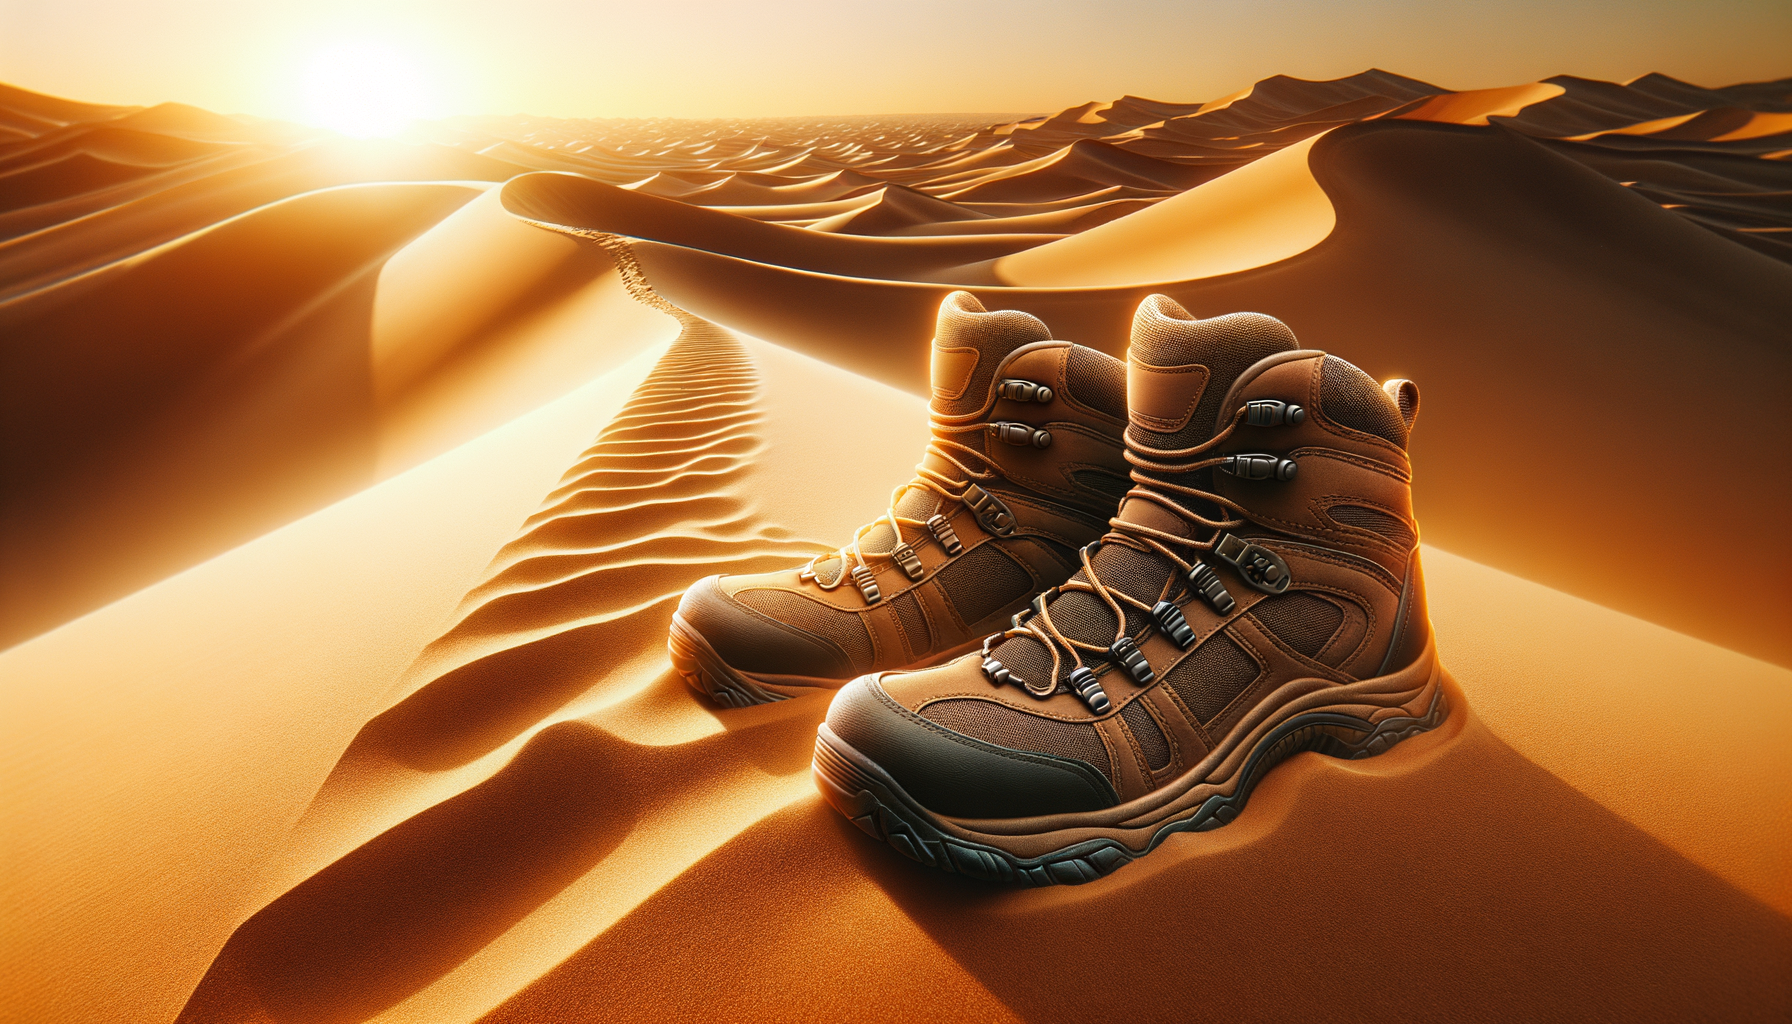 ALT: Durable desert hiking boots on sandy ground